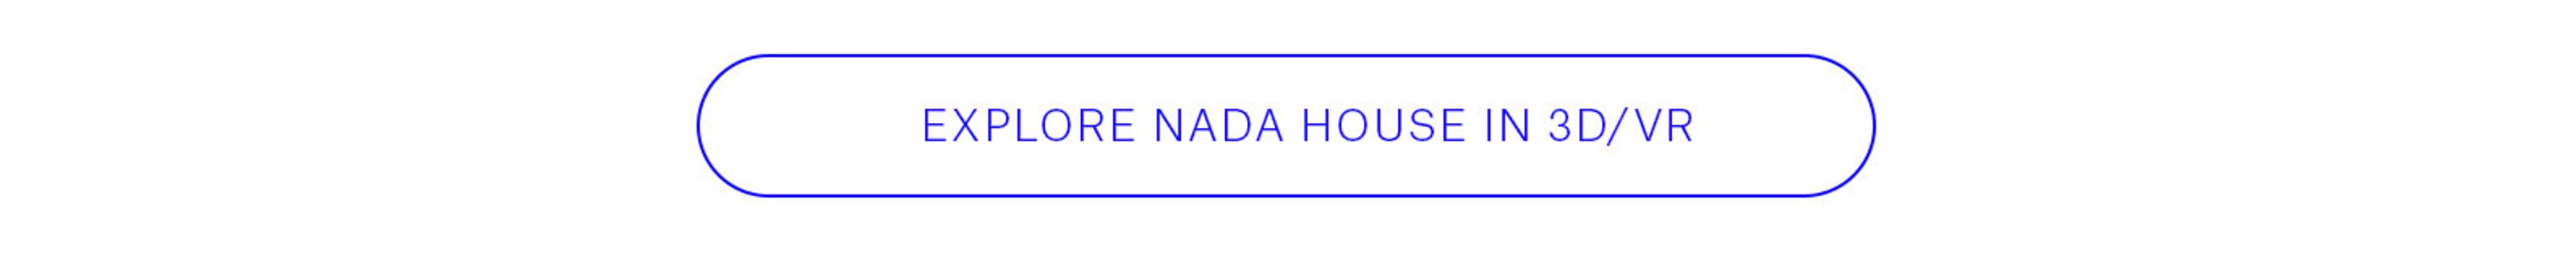 Explore Nada House in 3D/VR